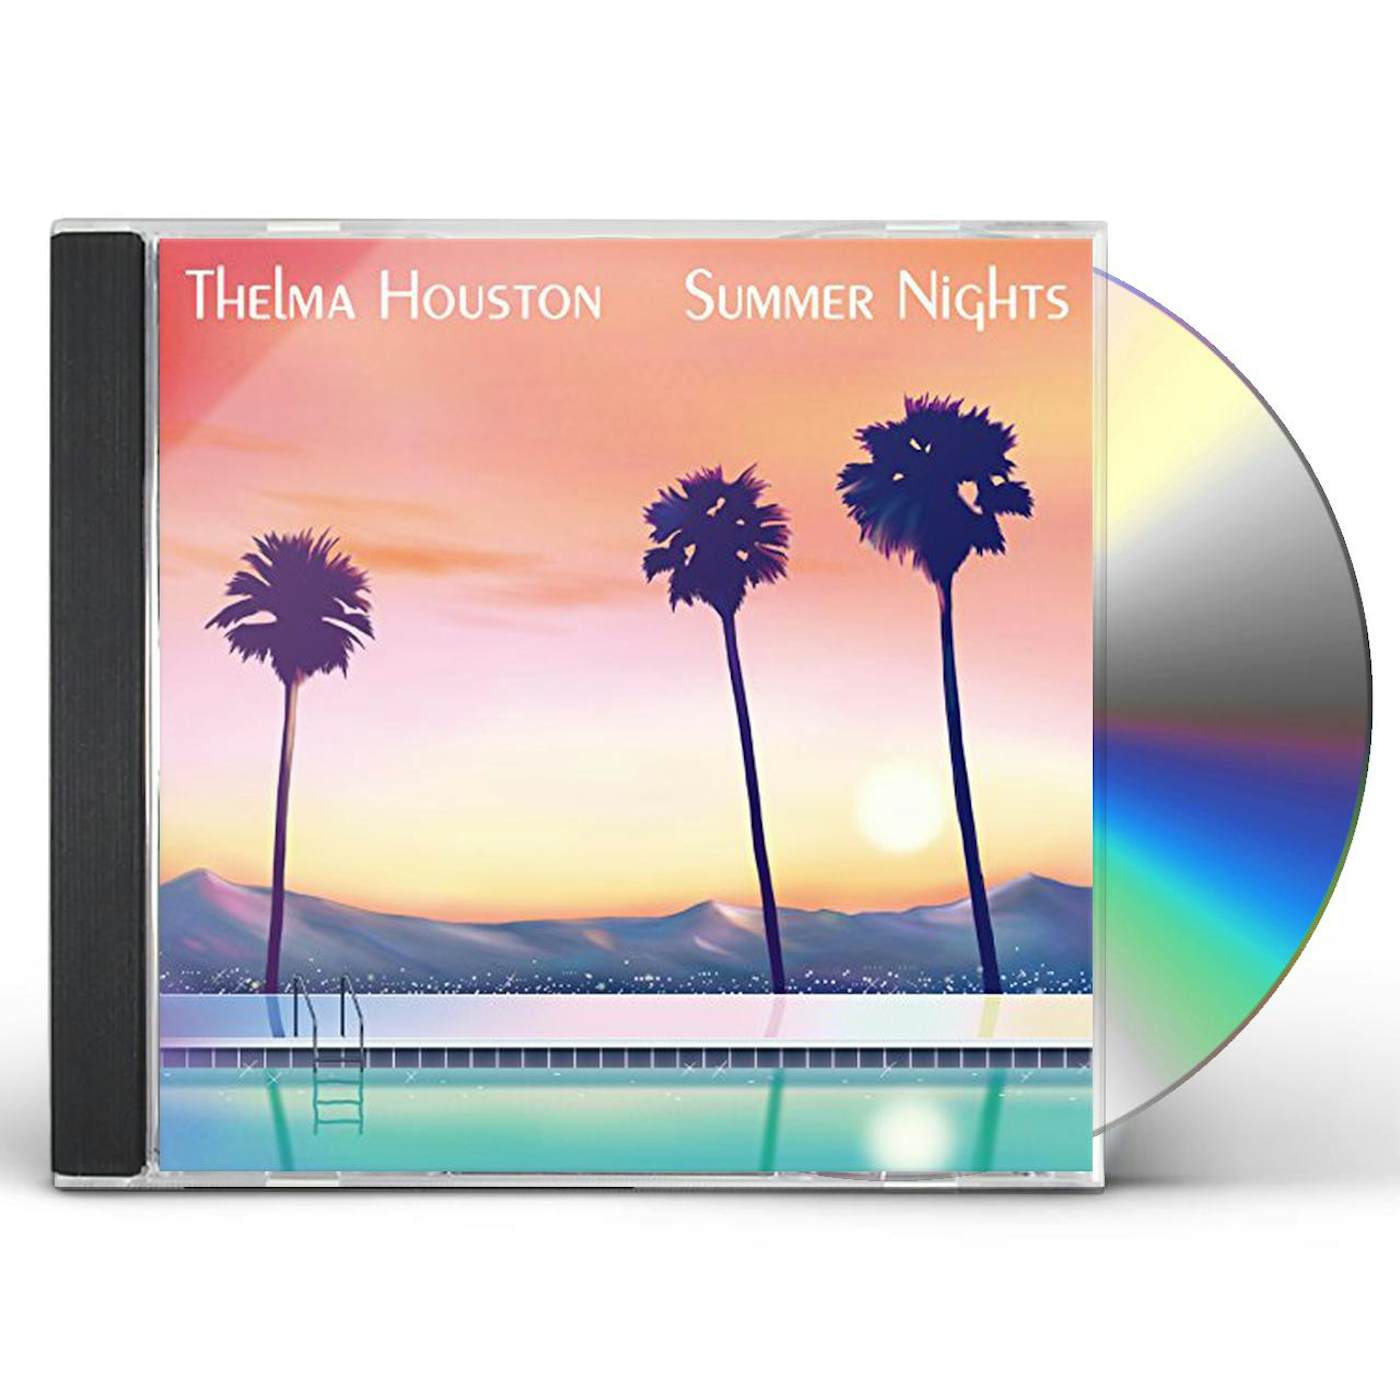 Thelma Houston SUMMER NIGHTS CD